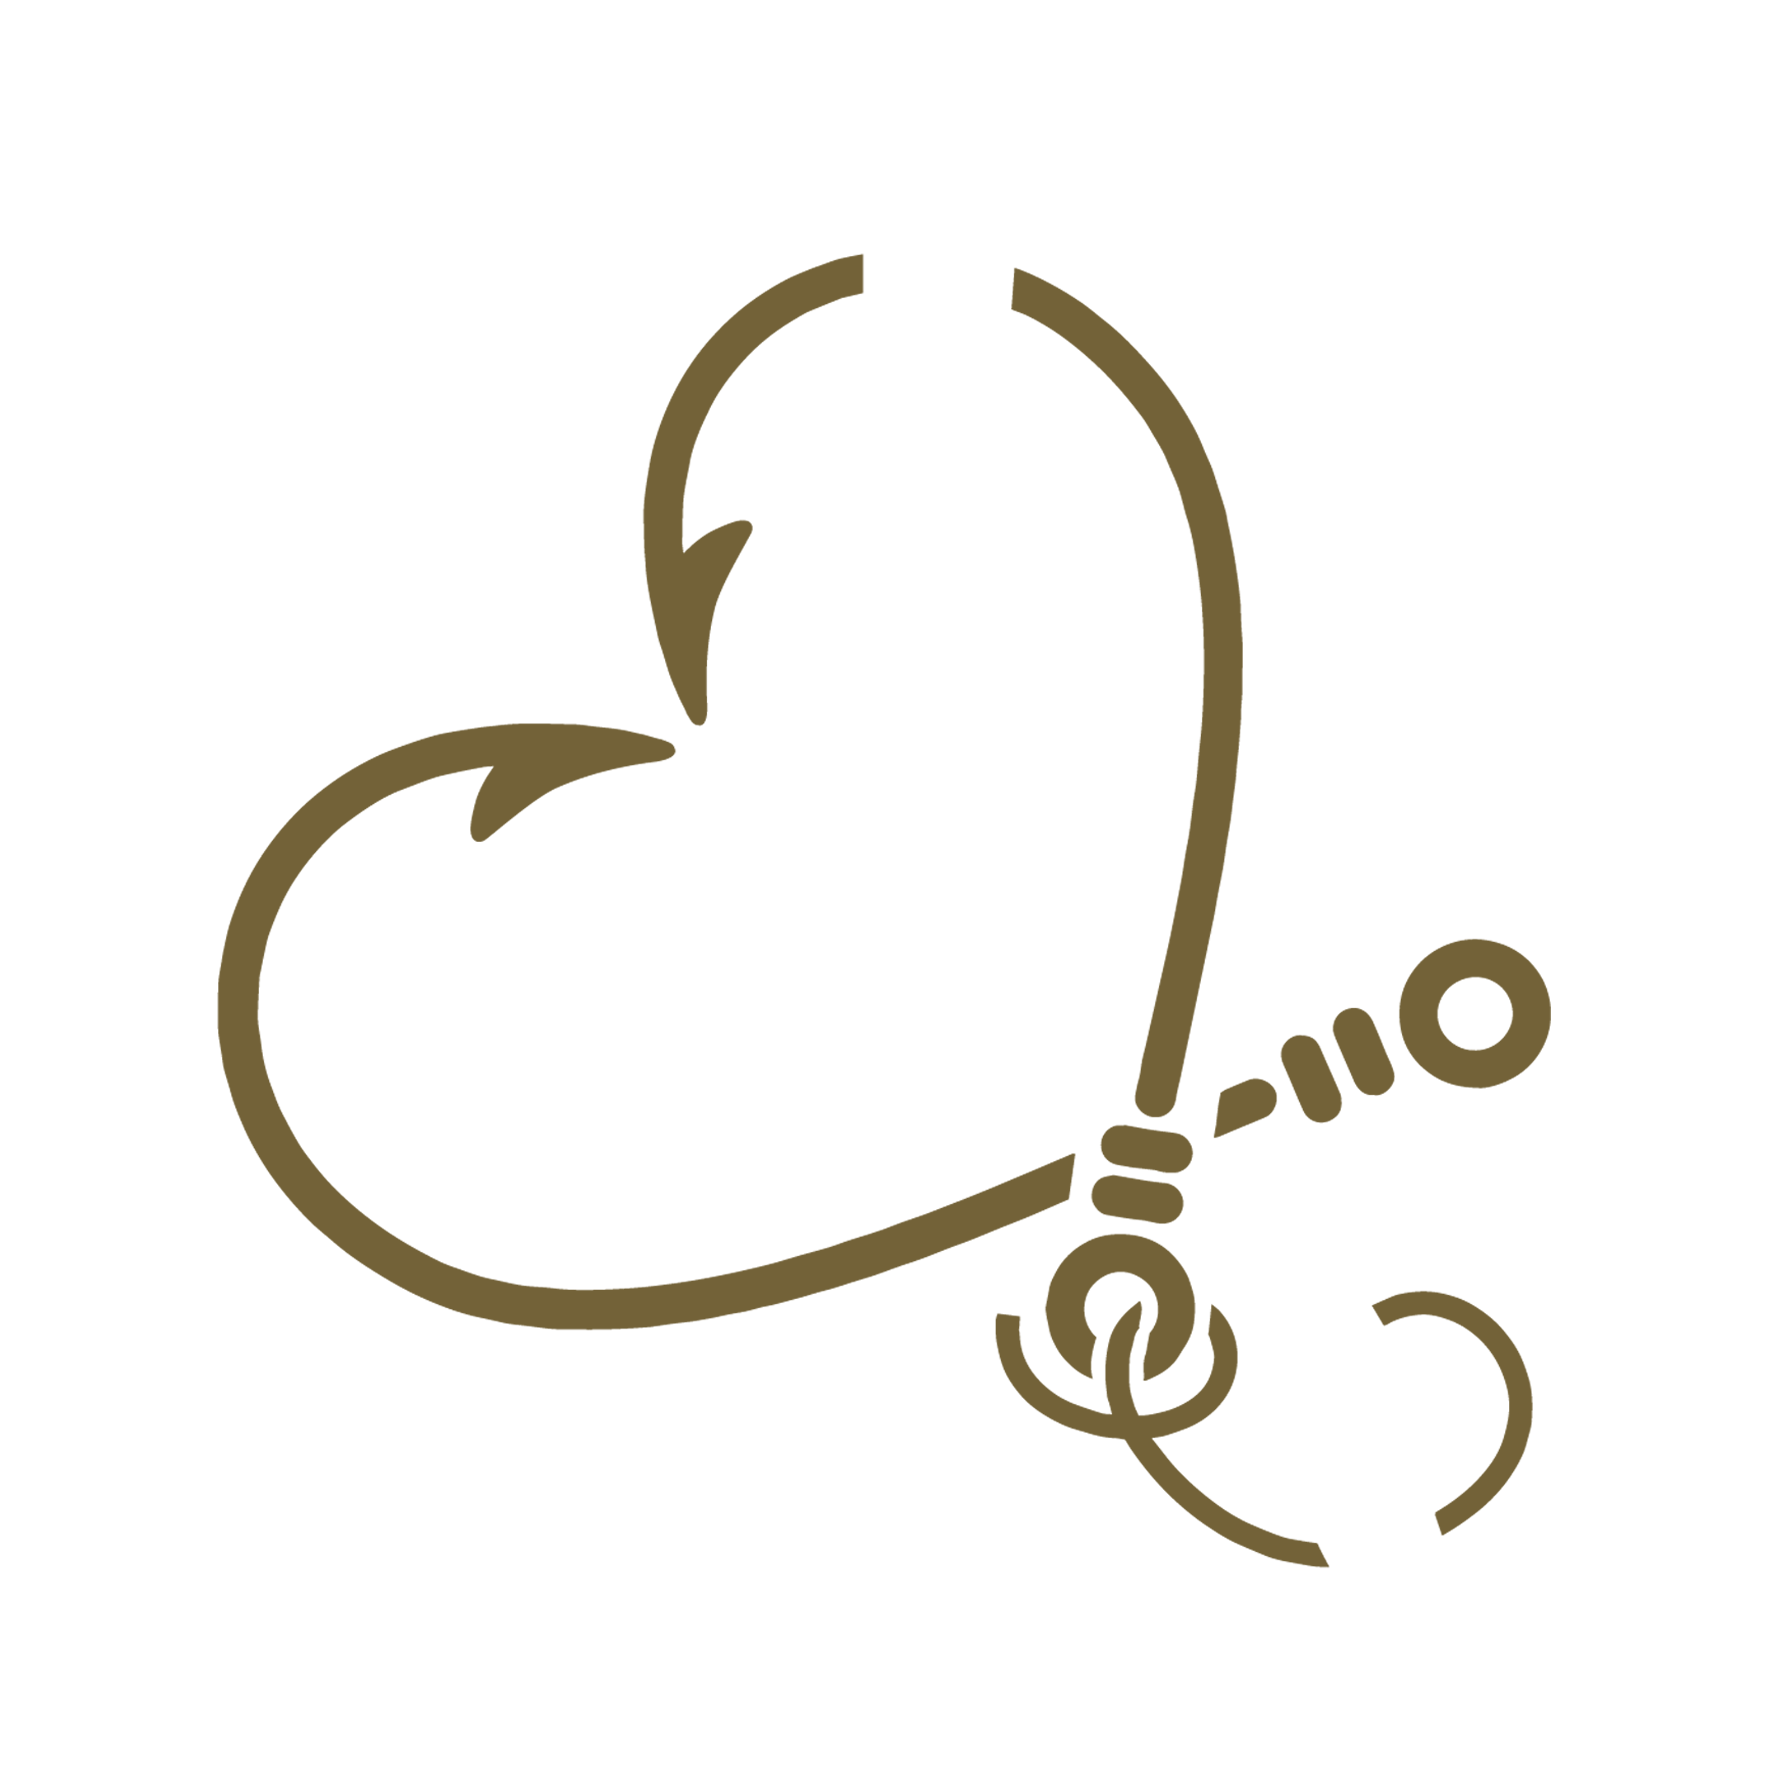 Lamo Logo - Lamo The Restaurant Mediterranean fusion - Home page